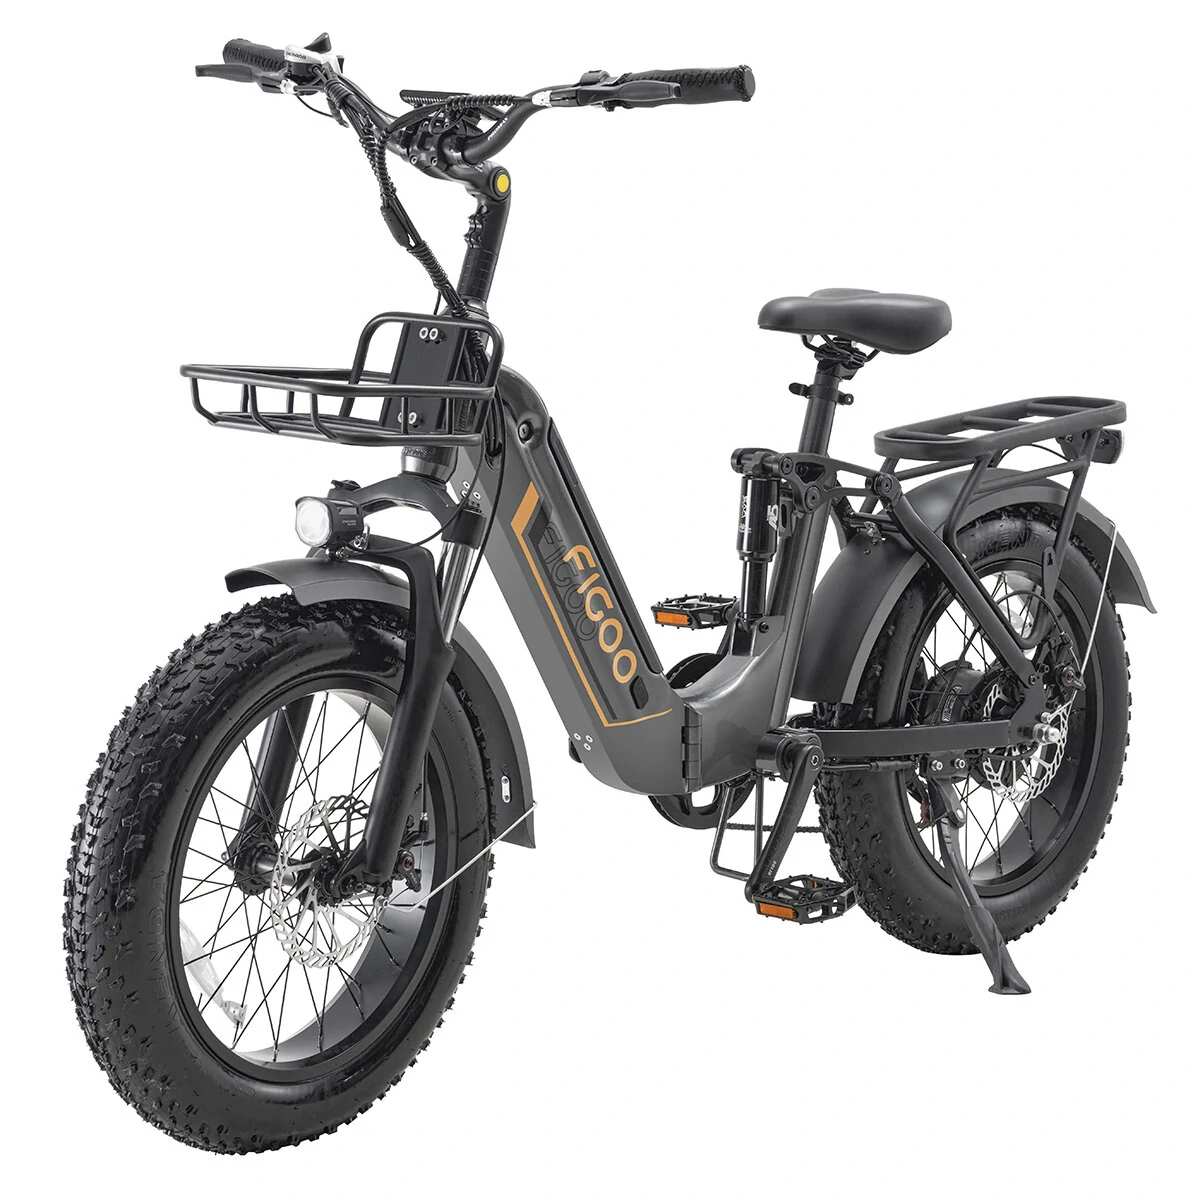 Figoo S2 Electric Bicycle Banggood Coupon Promo Code [US Warehouse]